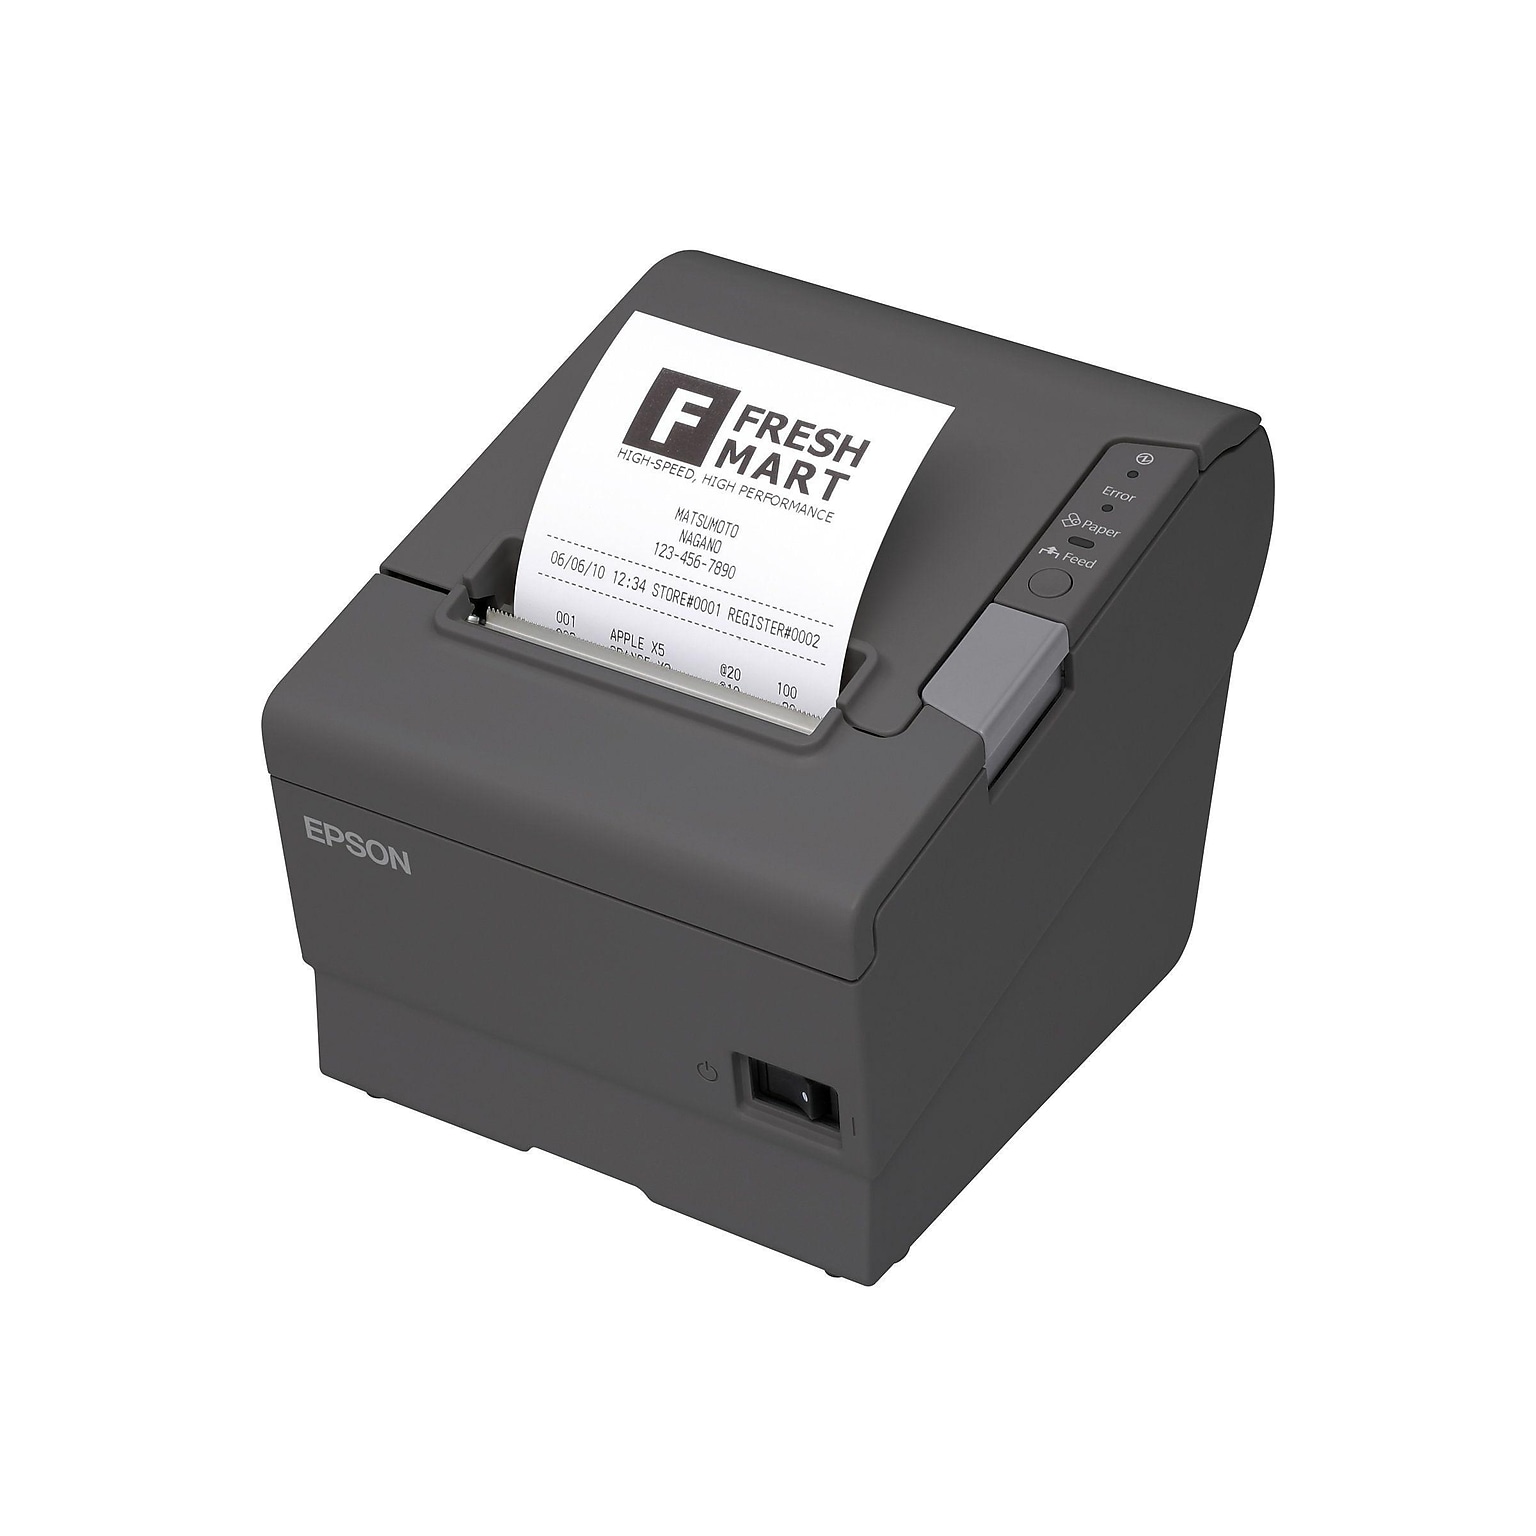 Epson TM-T88V Direct Thermal/Thermal Transfer POS Printer, USB, Seriel, Ethernet, Bluetooth, Dark Gray